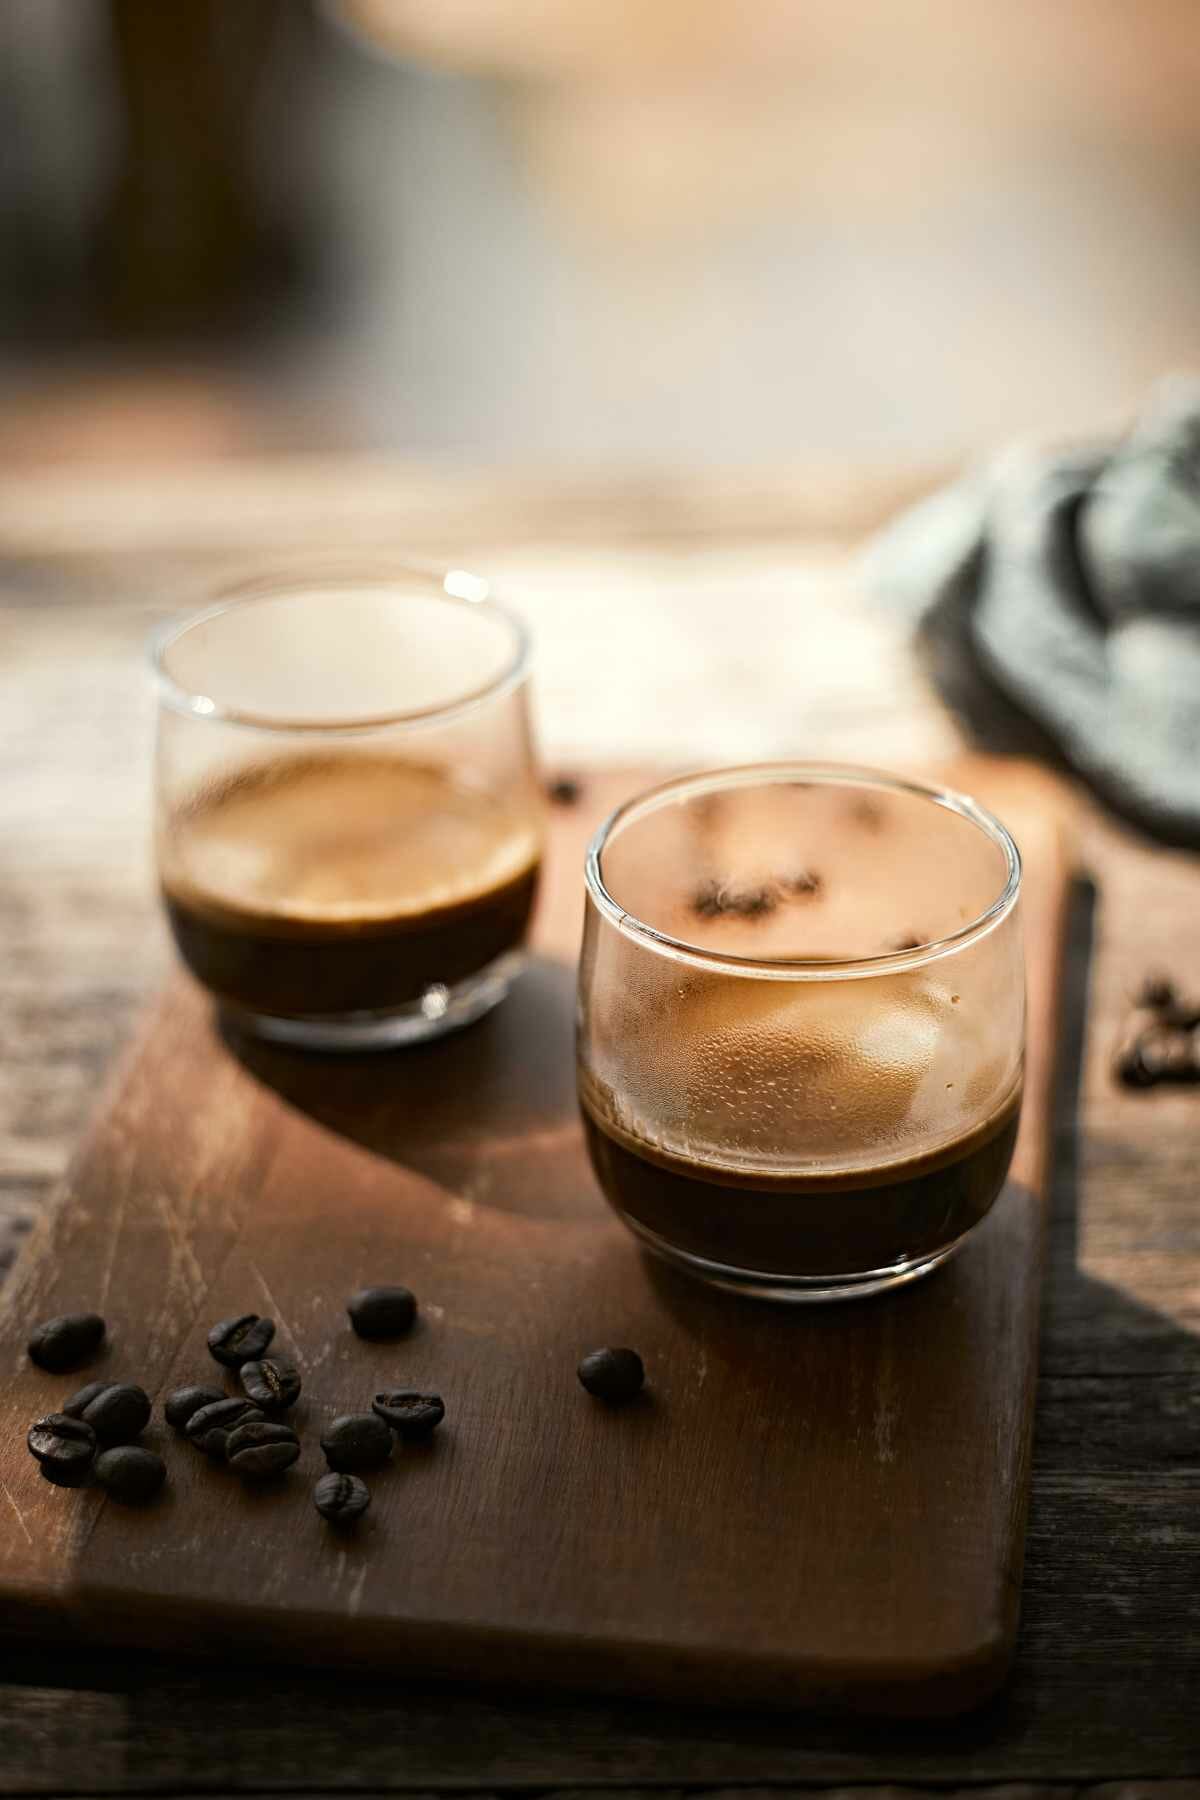 how much caffeine in a shot of espresso